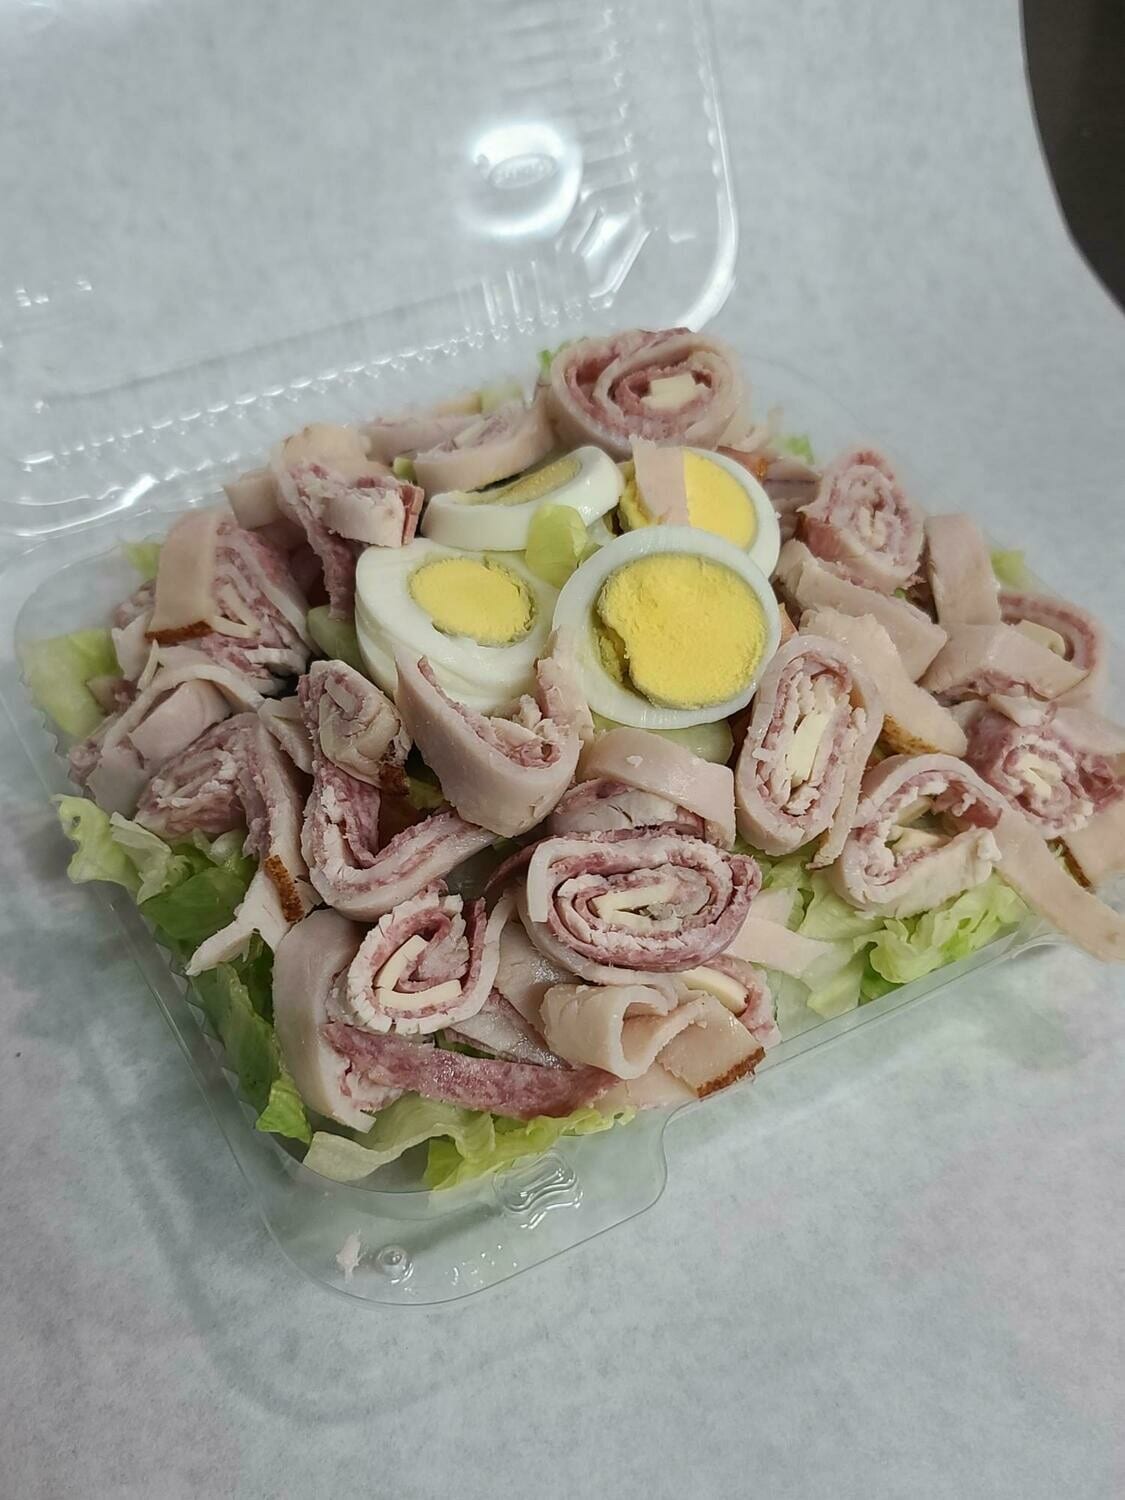 Giovanni's Chef Salad